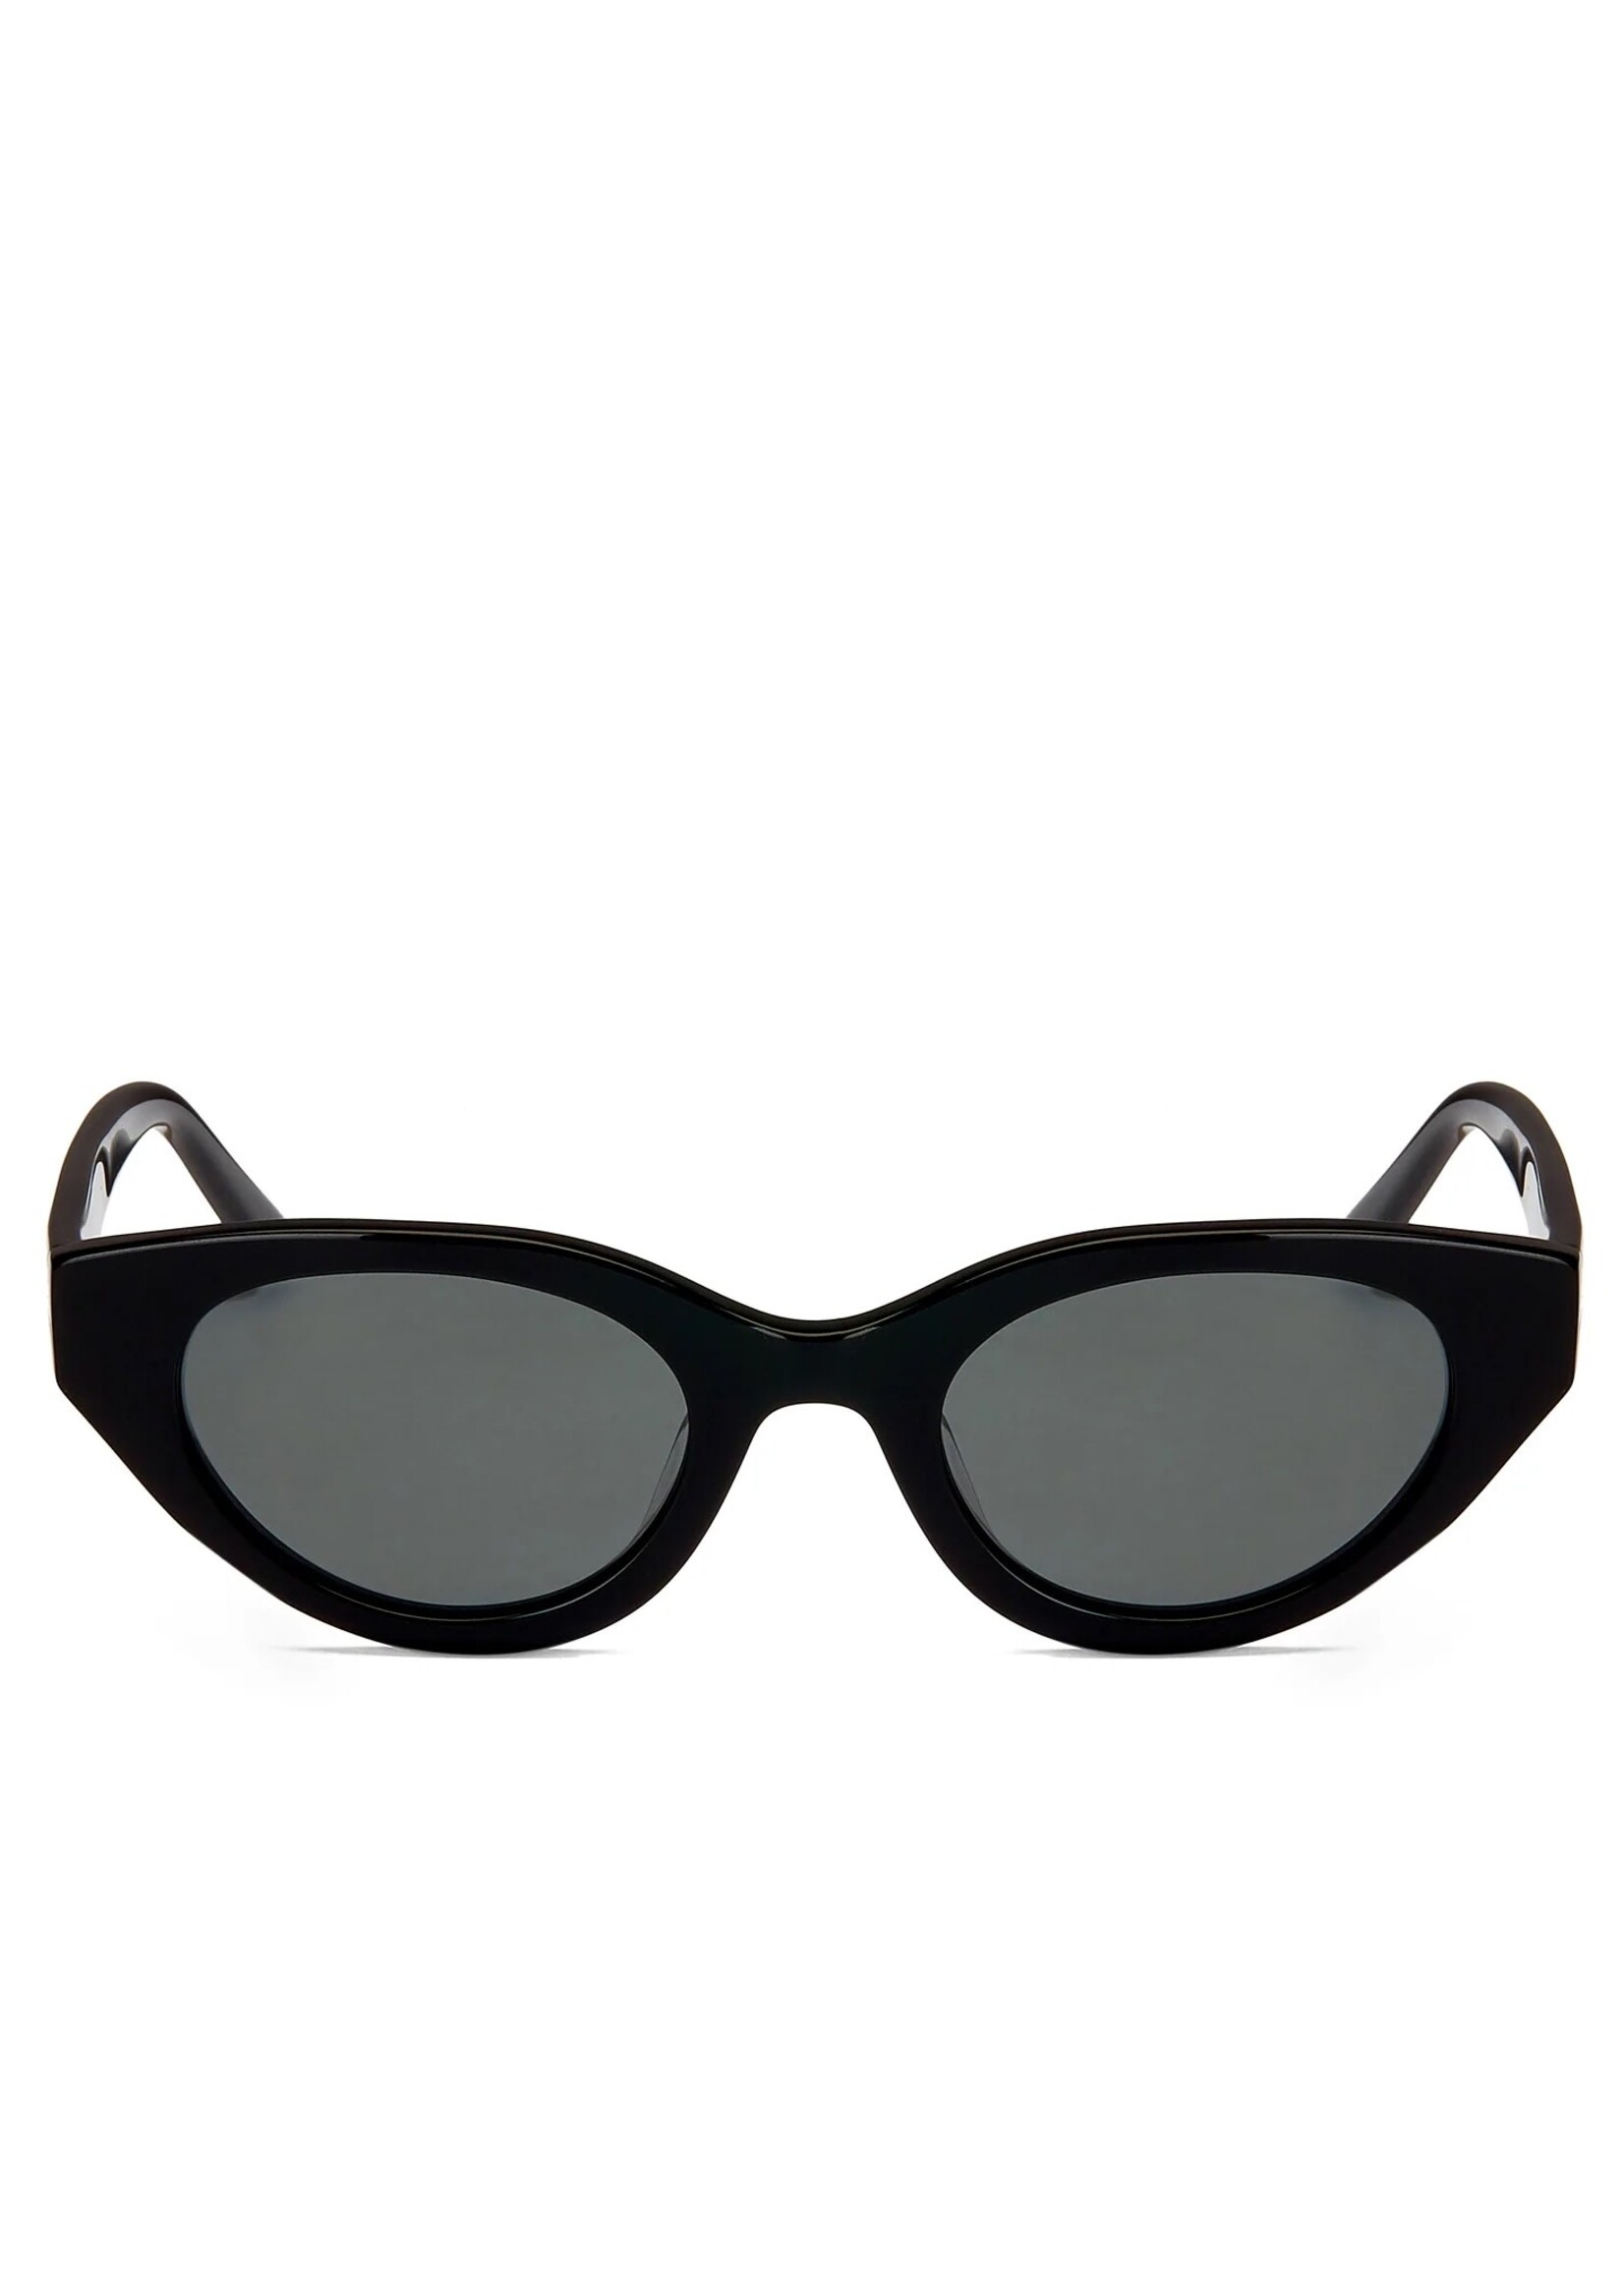 Eleventh Hour Girls Trip Sunglasses Black